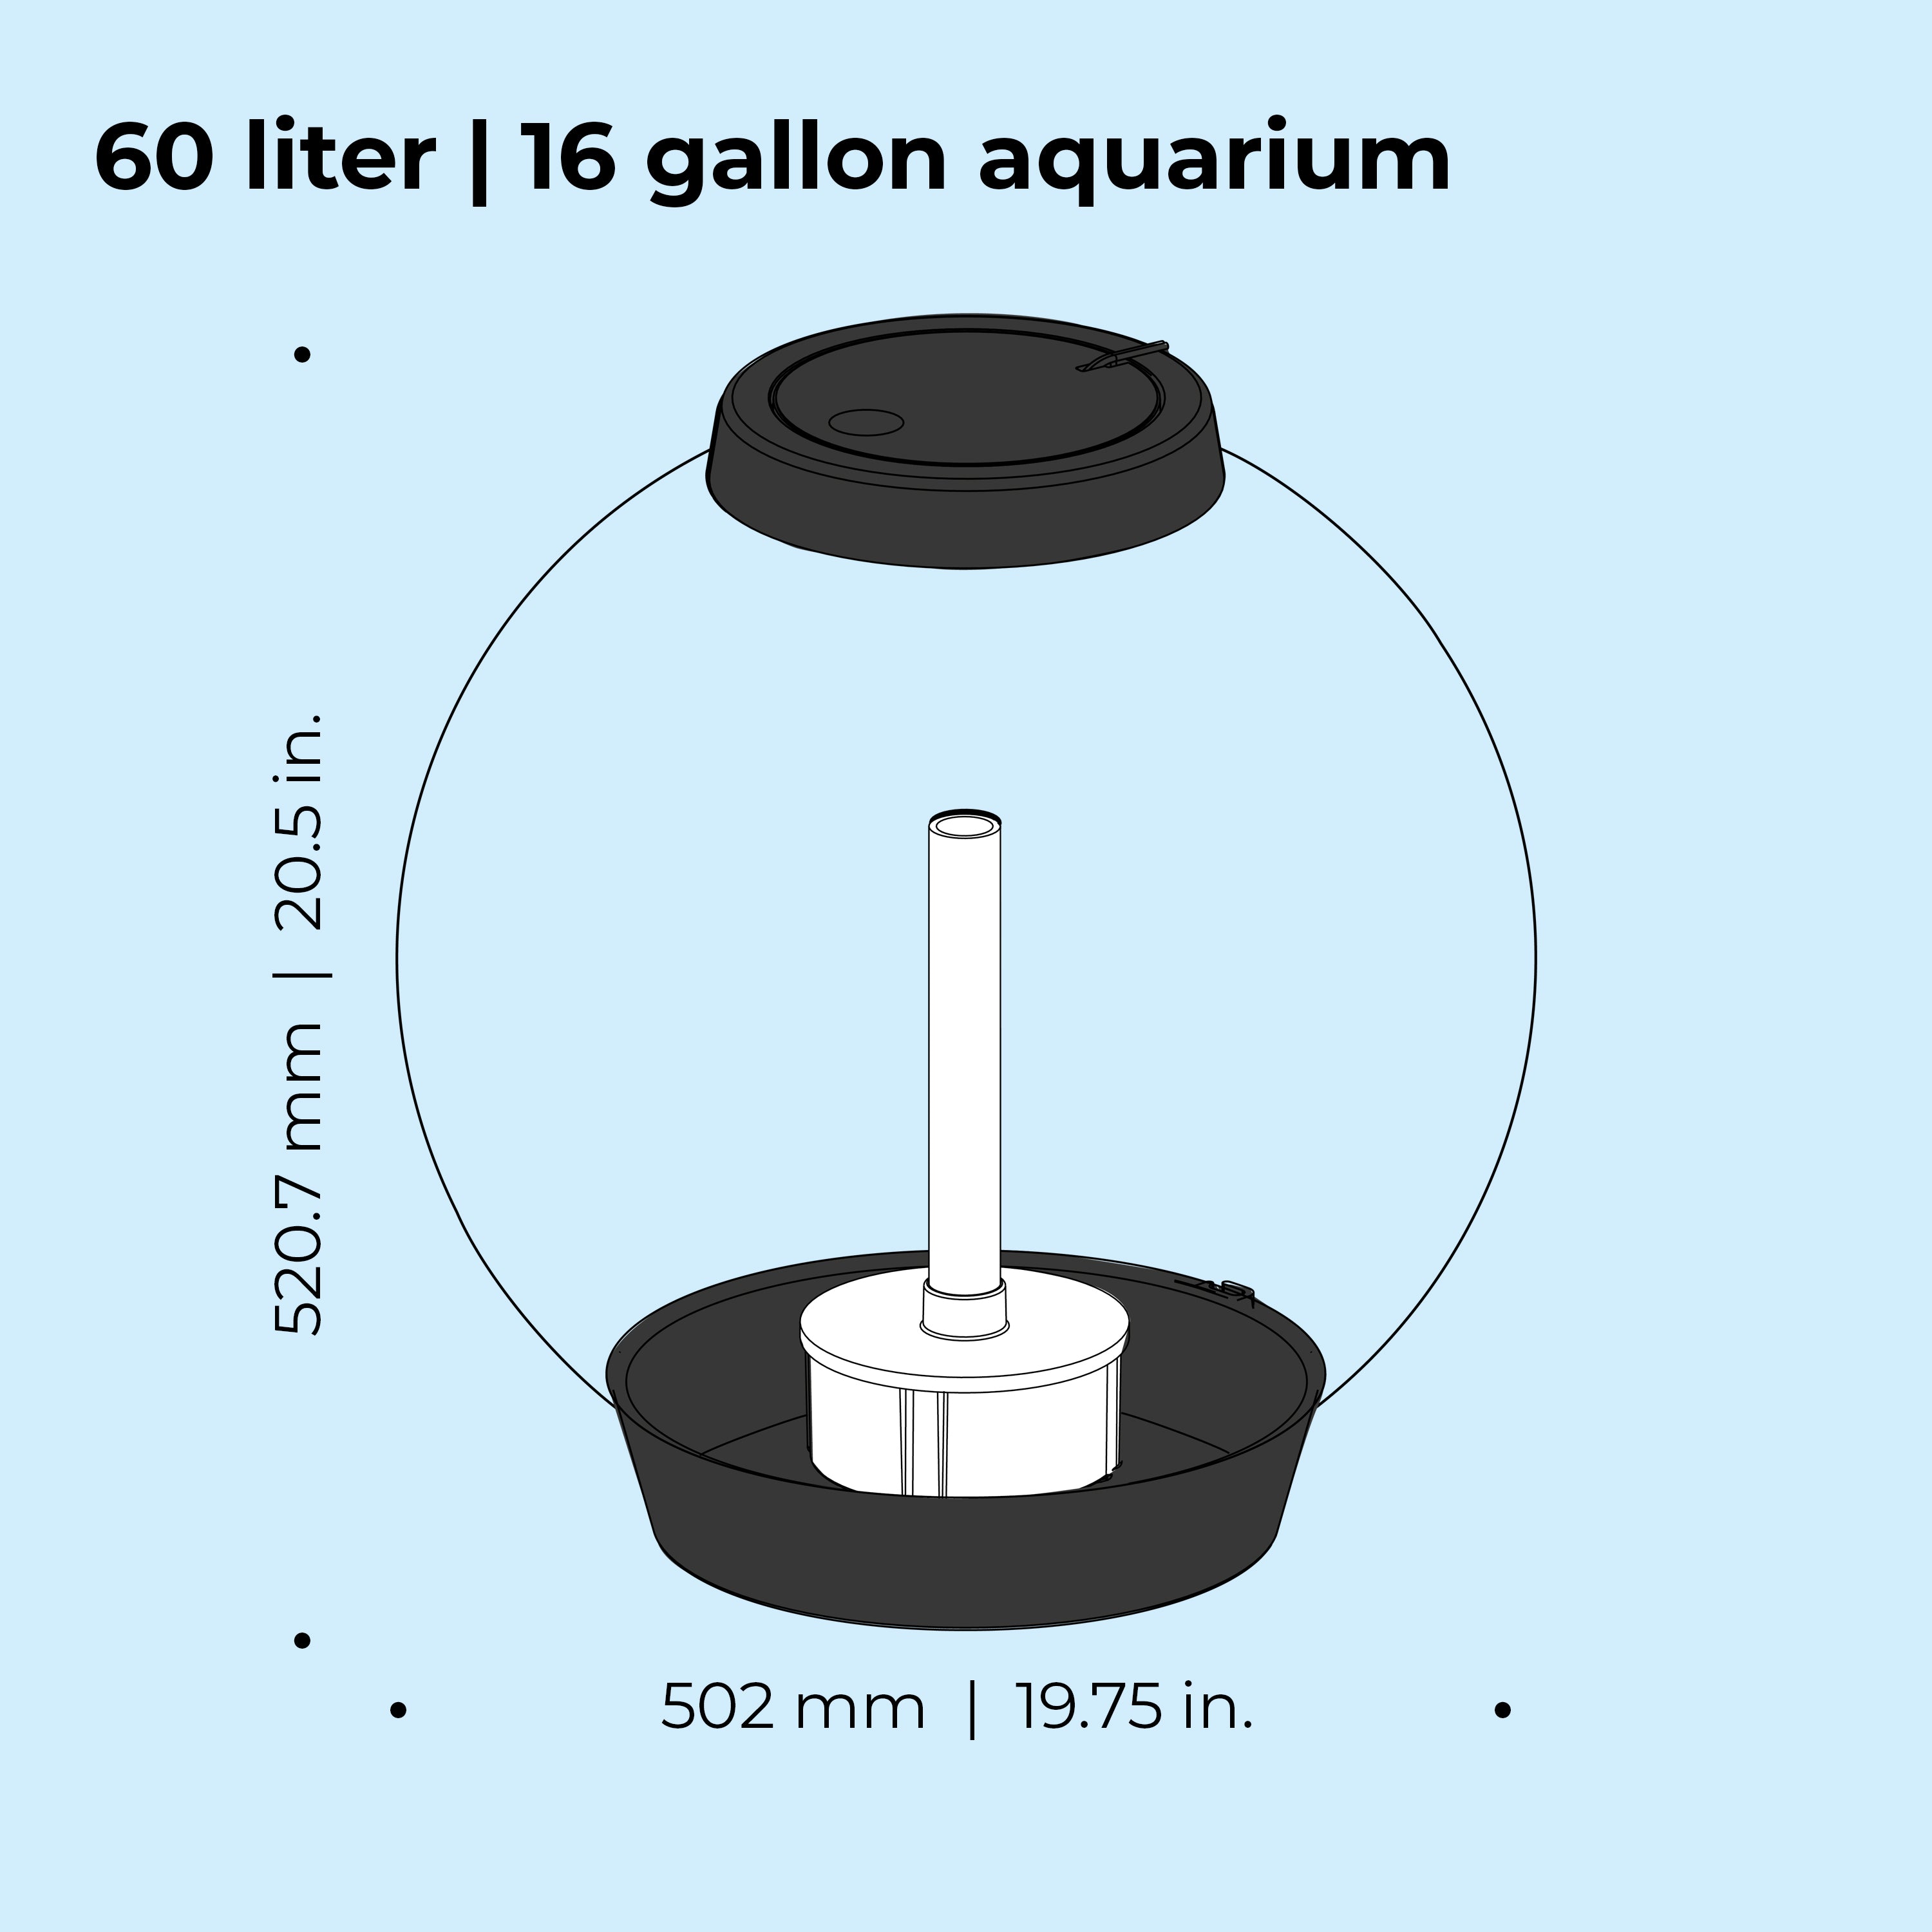 CLASSIC 60 Aquarium with Standard Light - 16 gallon, 60 liter dimension chart